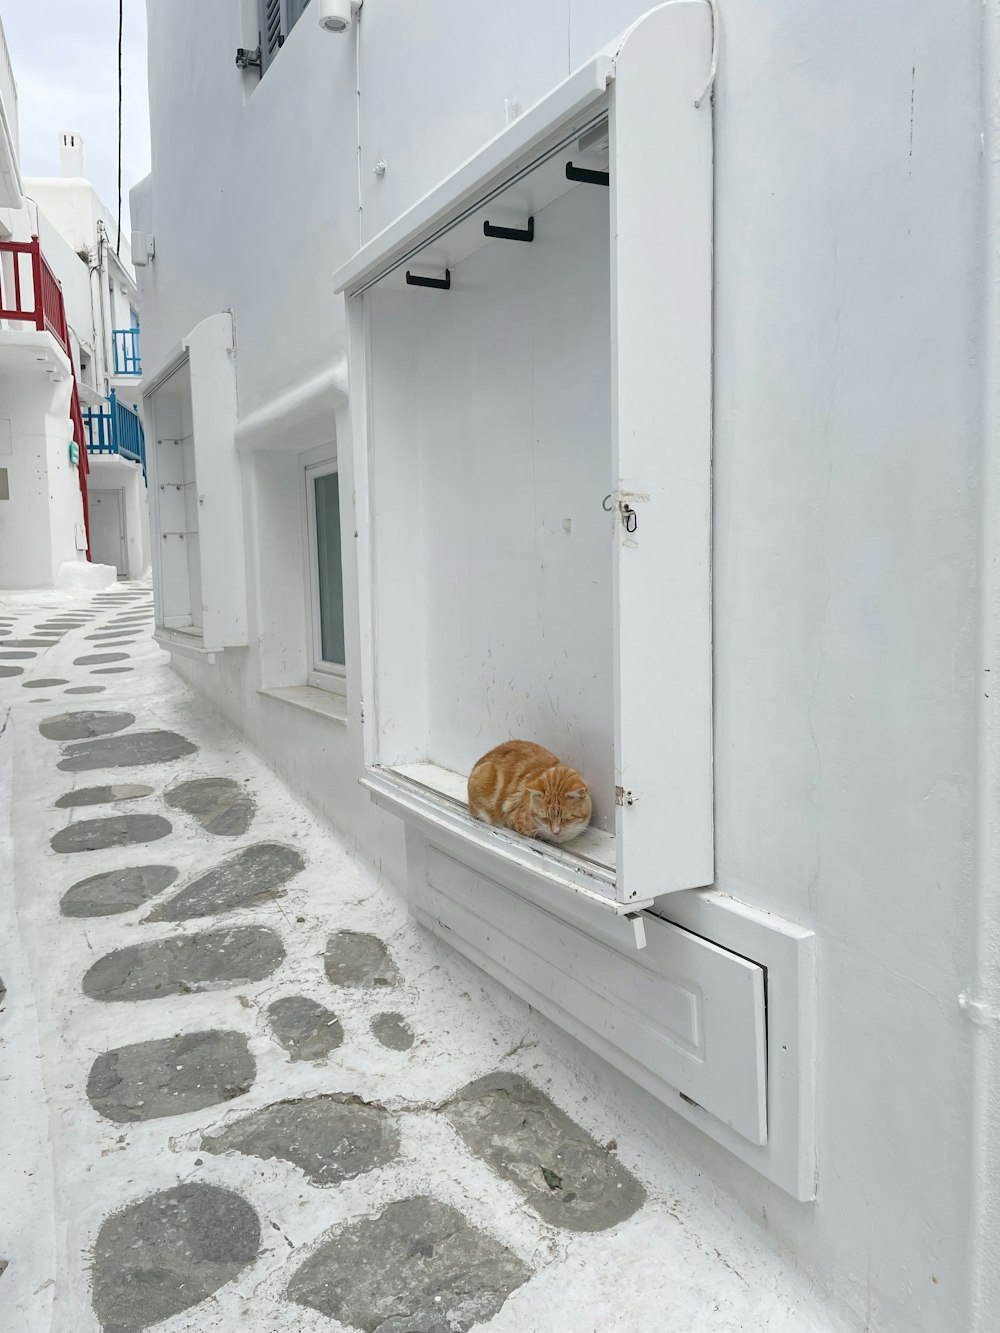 an orange cat sleeping in a window of a white building